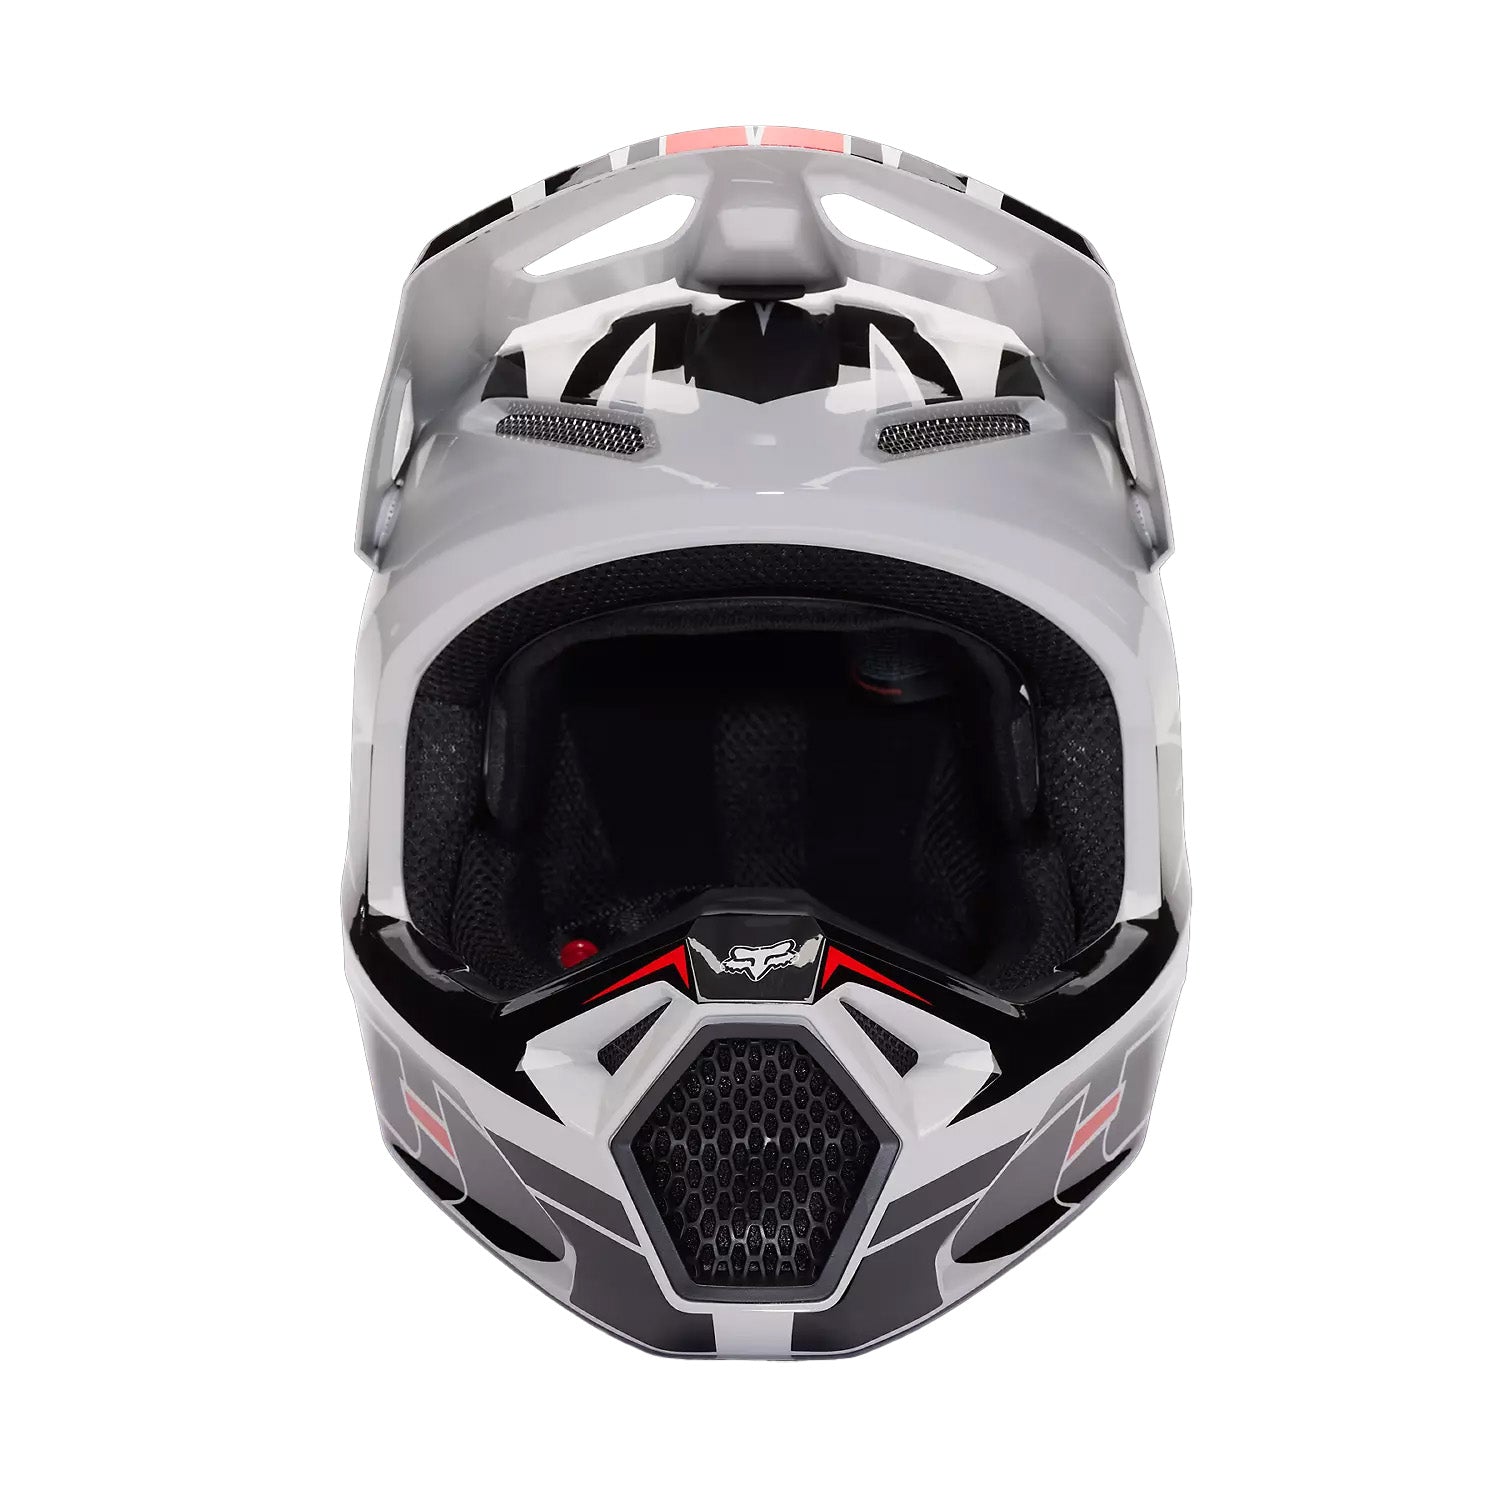 Fox Racing  Youth V1 GOAT Strafer Helmet Optimum Airflow Vented System Black FMVSS 218